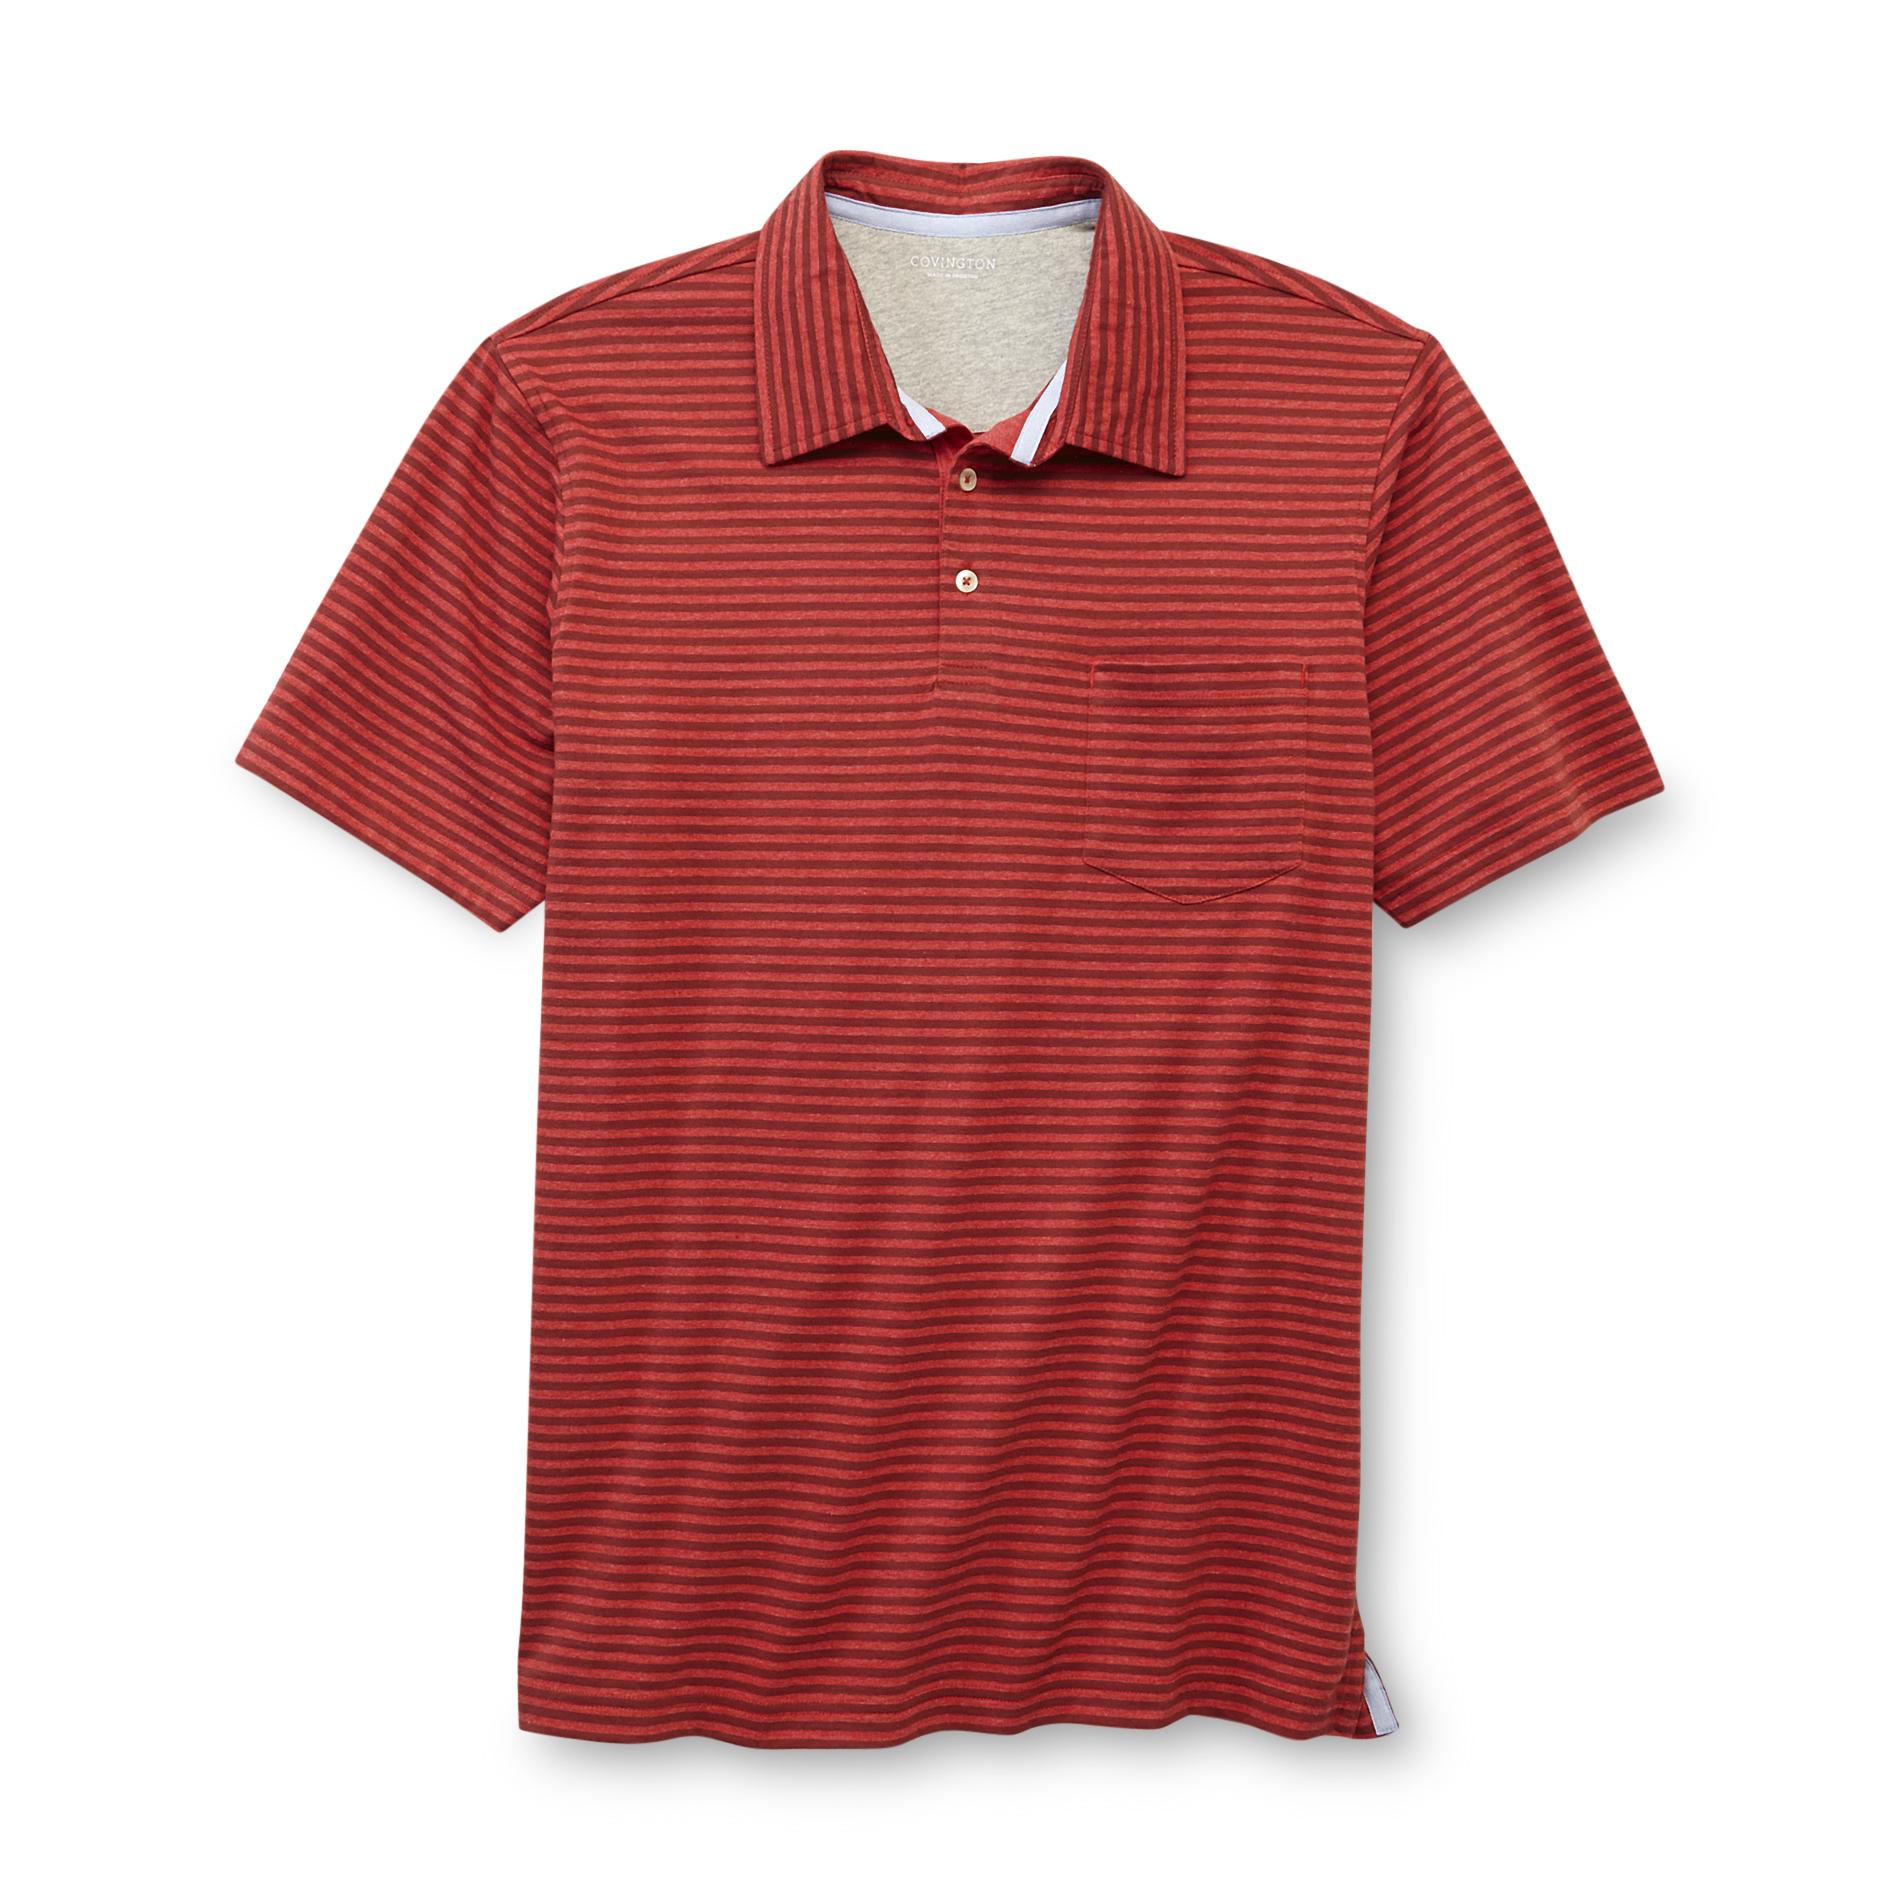 Covington Men's Pocket Golf Shirt - Striped